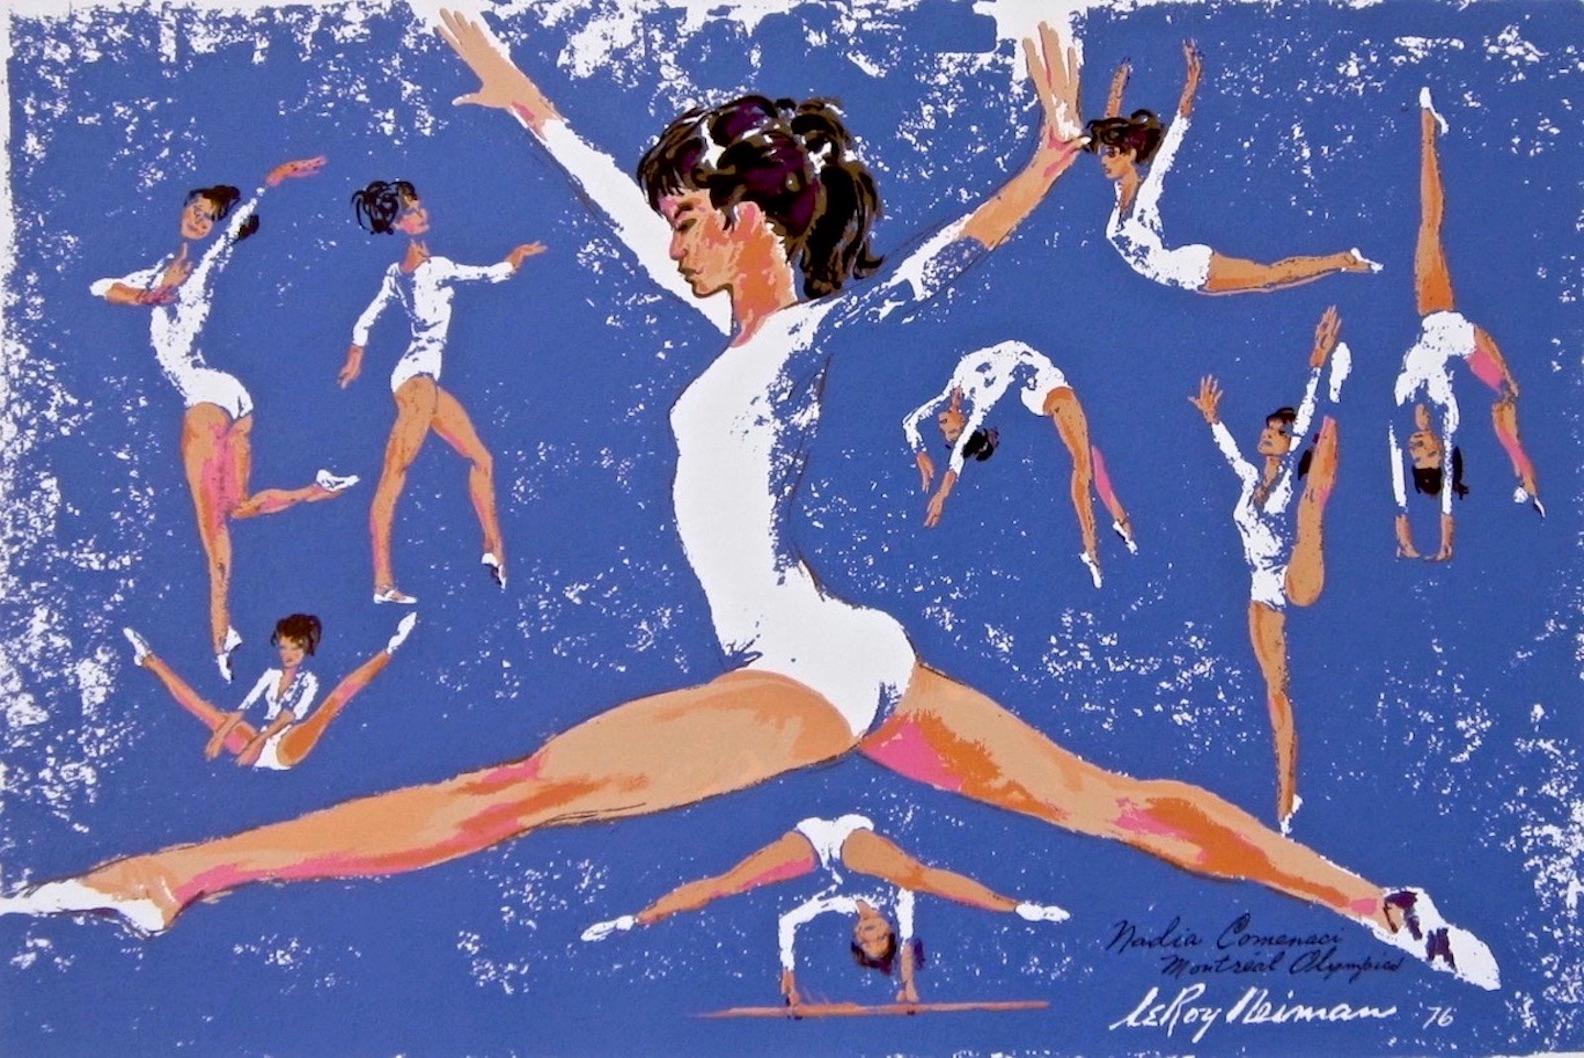 Nadia, Comaneci Montrealer Olympische Spiele, Poster, 1976